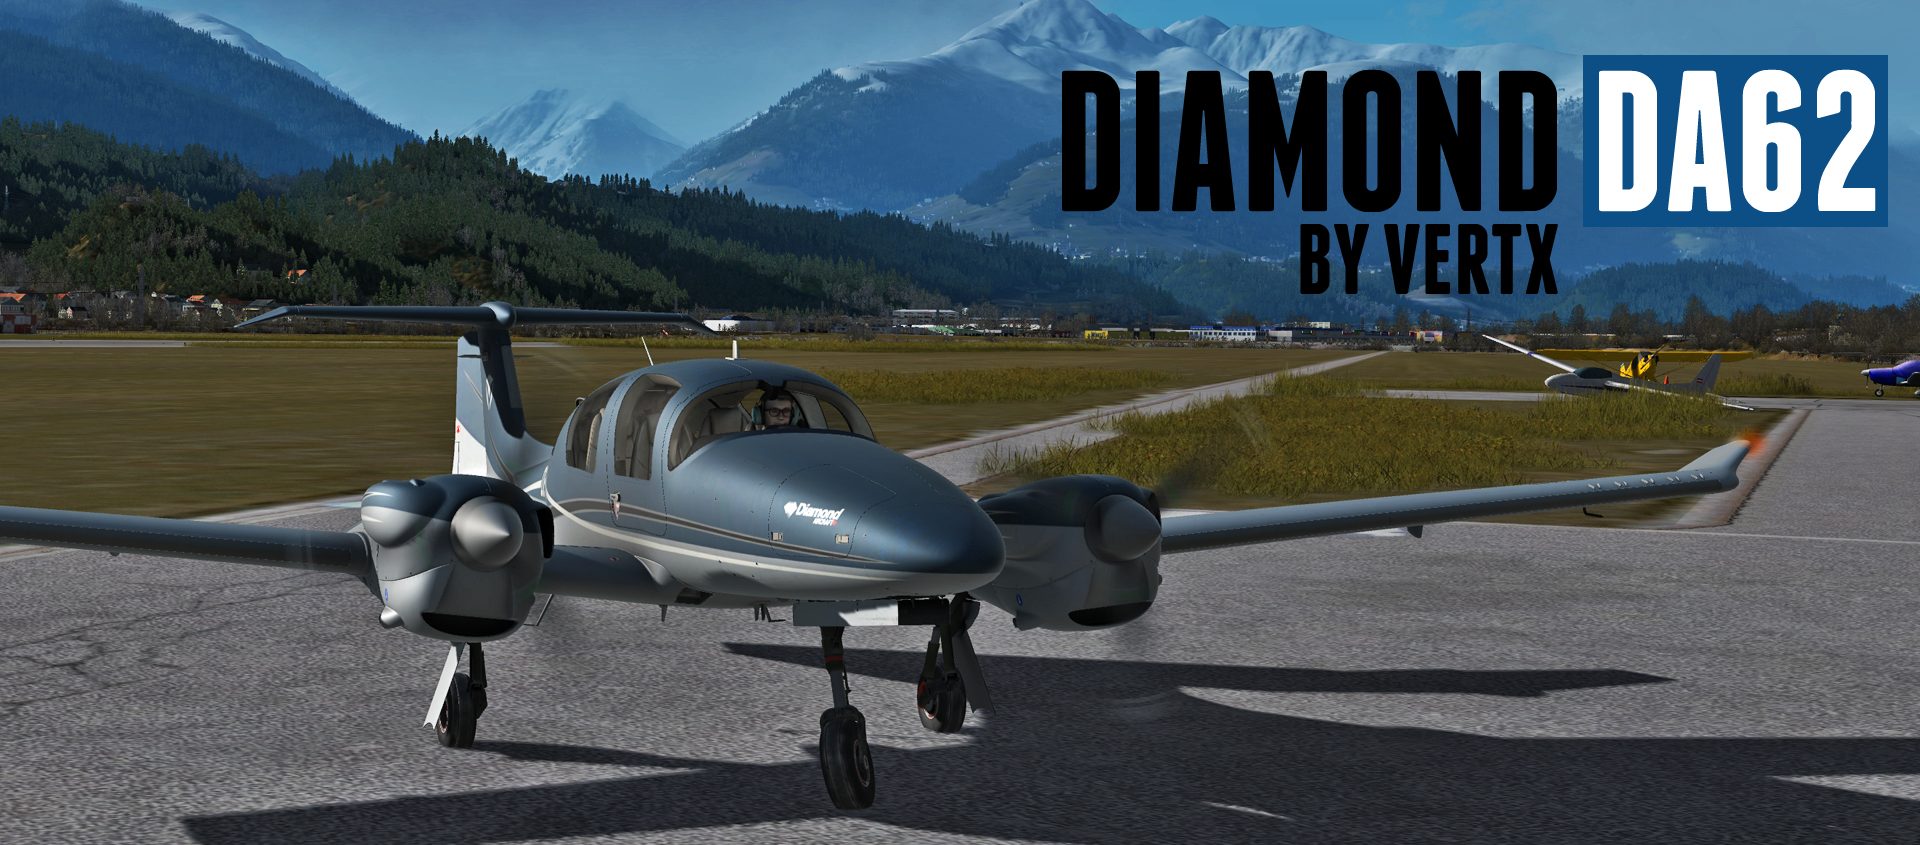 Vertx Diamond DA62 - Review